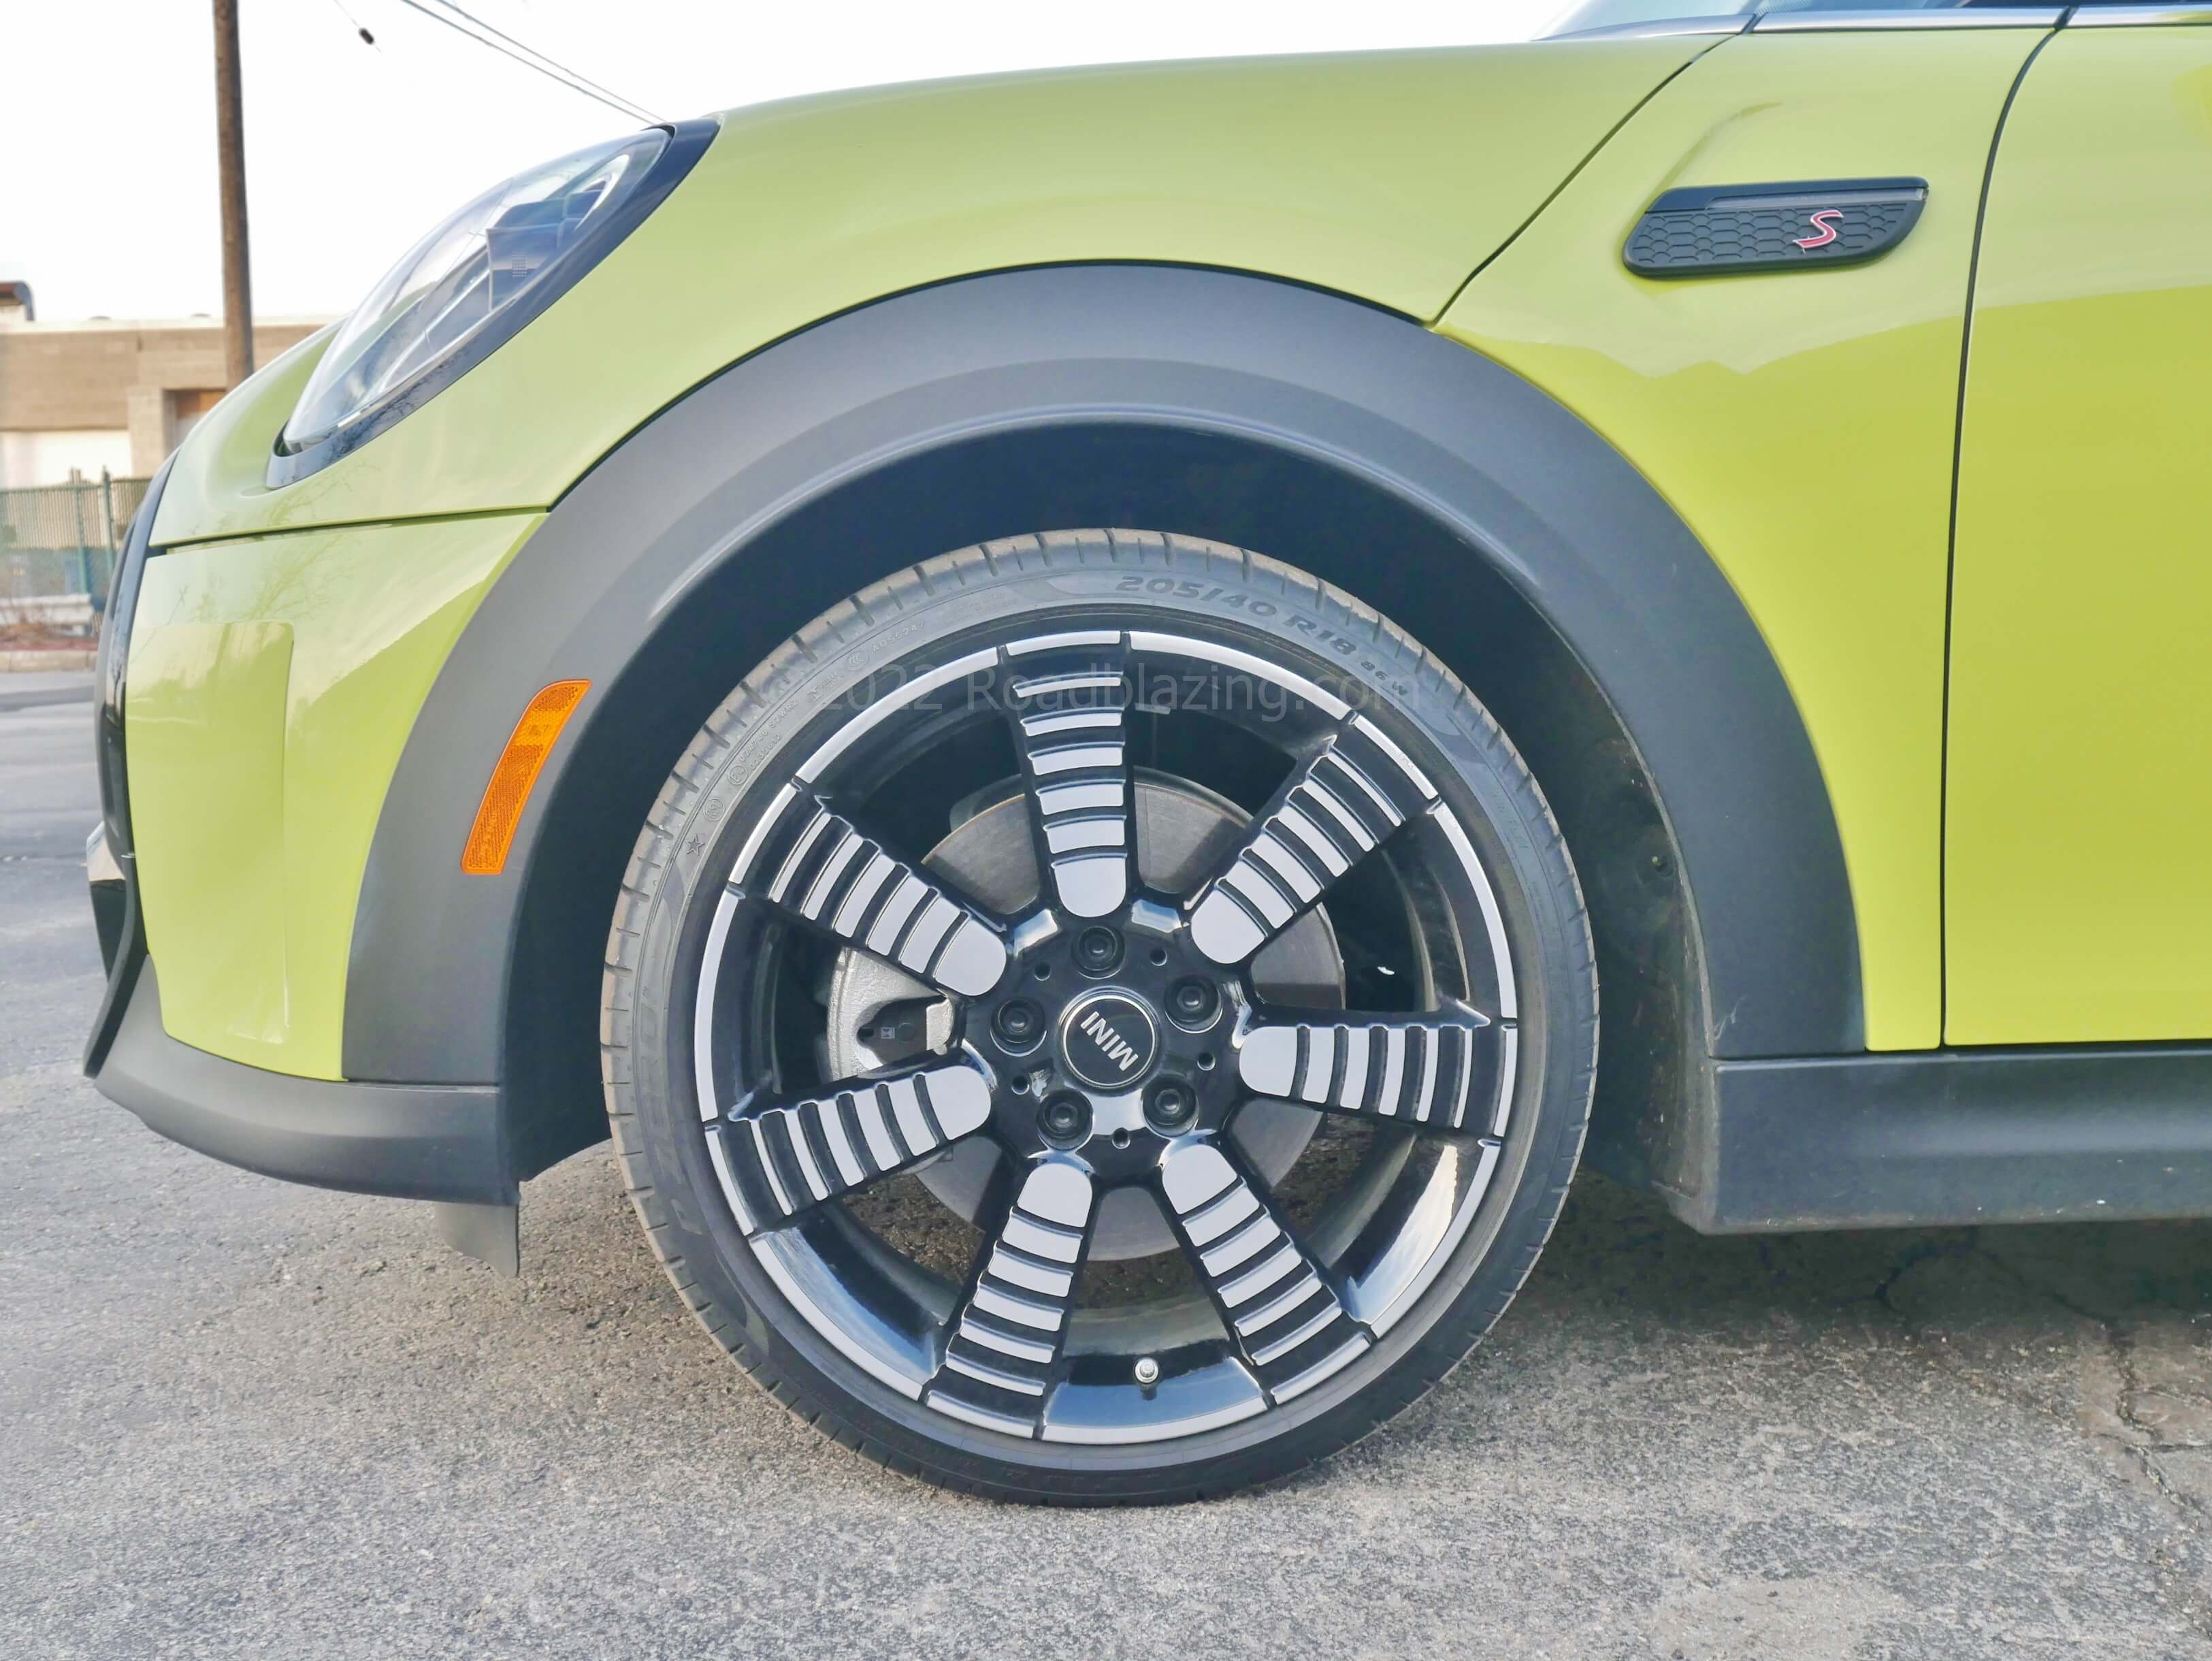 2022 MINI Cooper S Convertible: rather taut indie suspension wears low profile Pirelli PZeros on 18" wheels